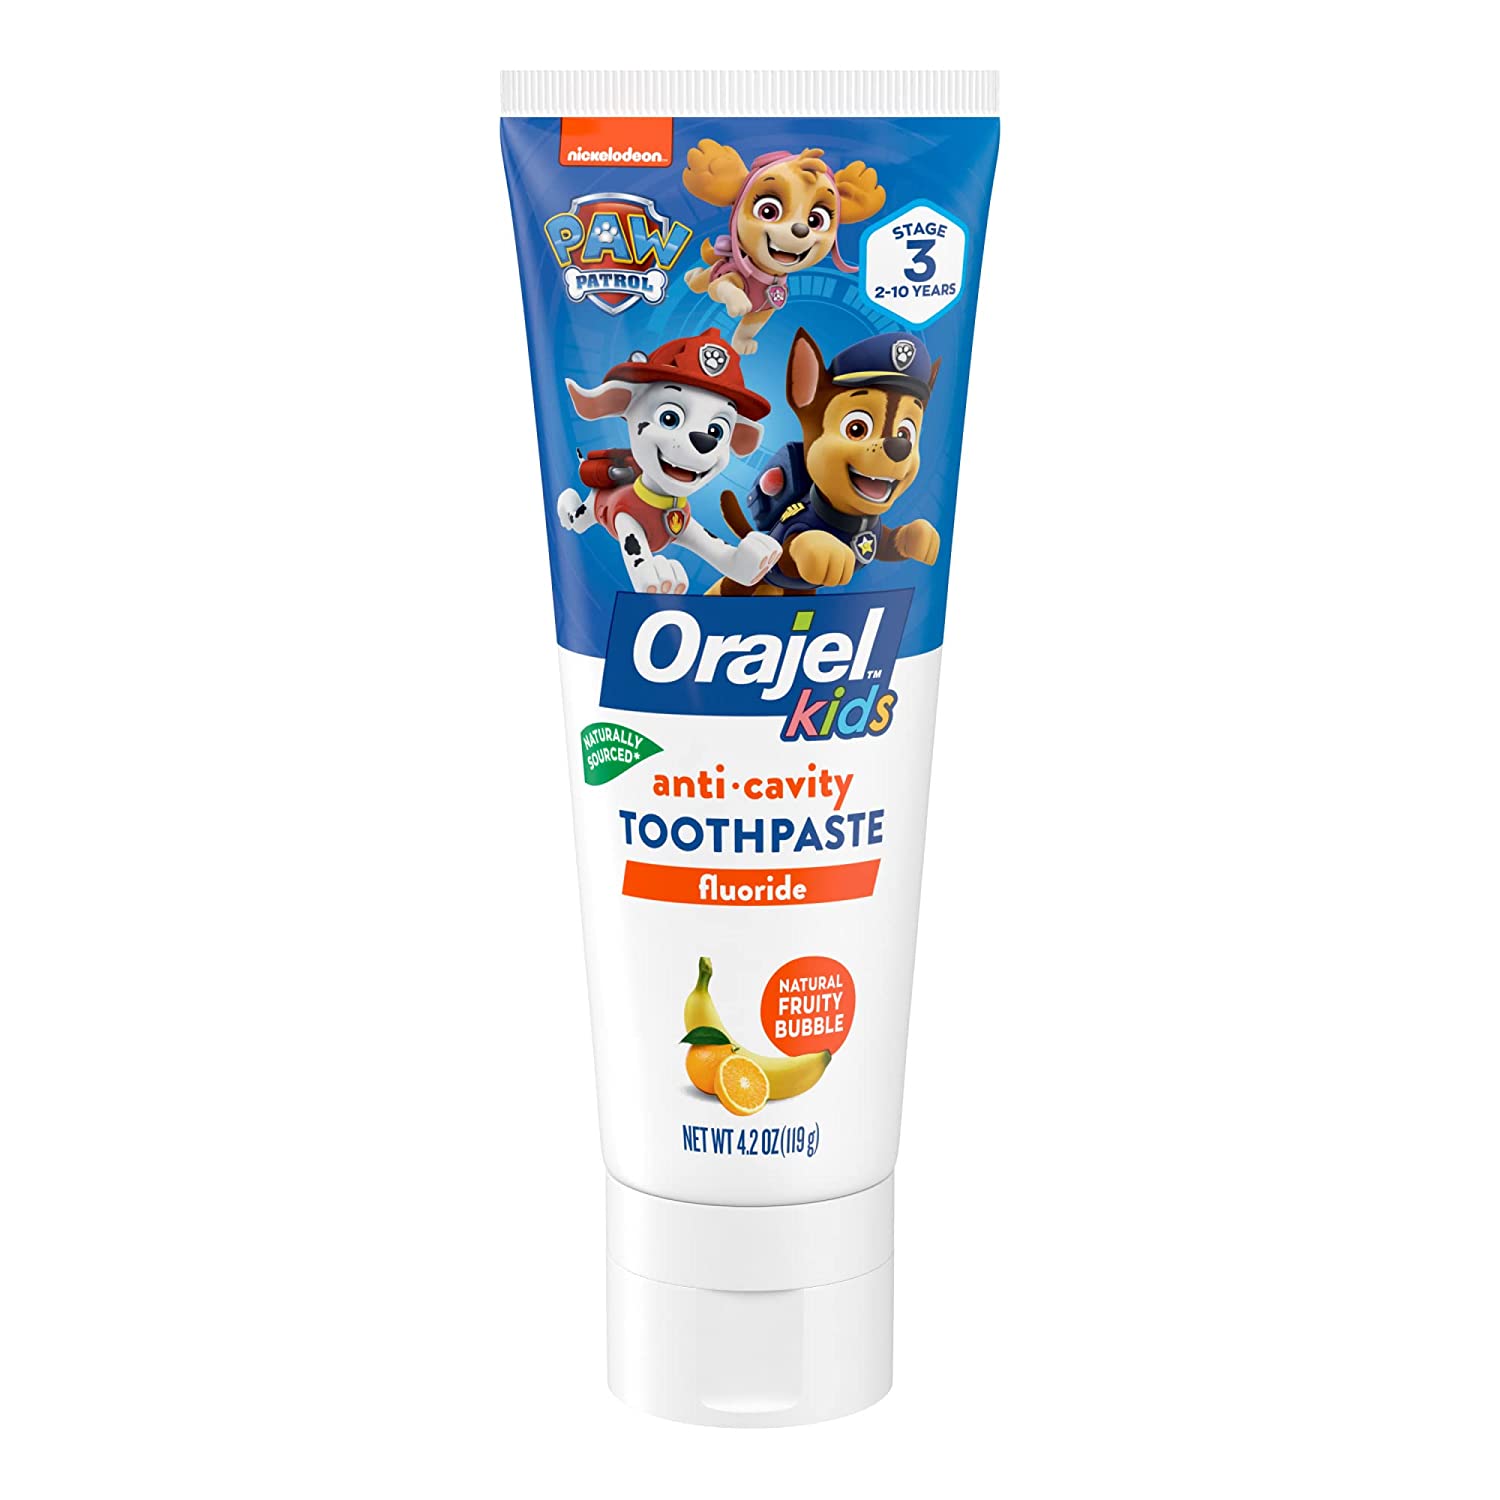 4.2-Oz Orajel PAW Patrol Anticavity Fluoride Toothpaste (Fruity Bubble) $1.82 w/ Subscribe & Save